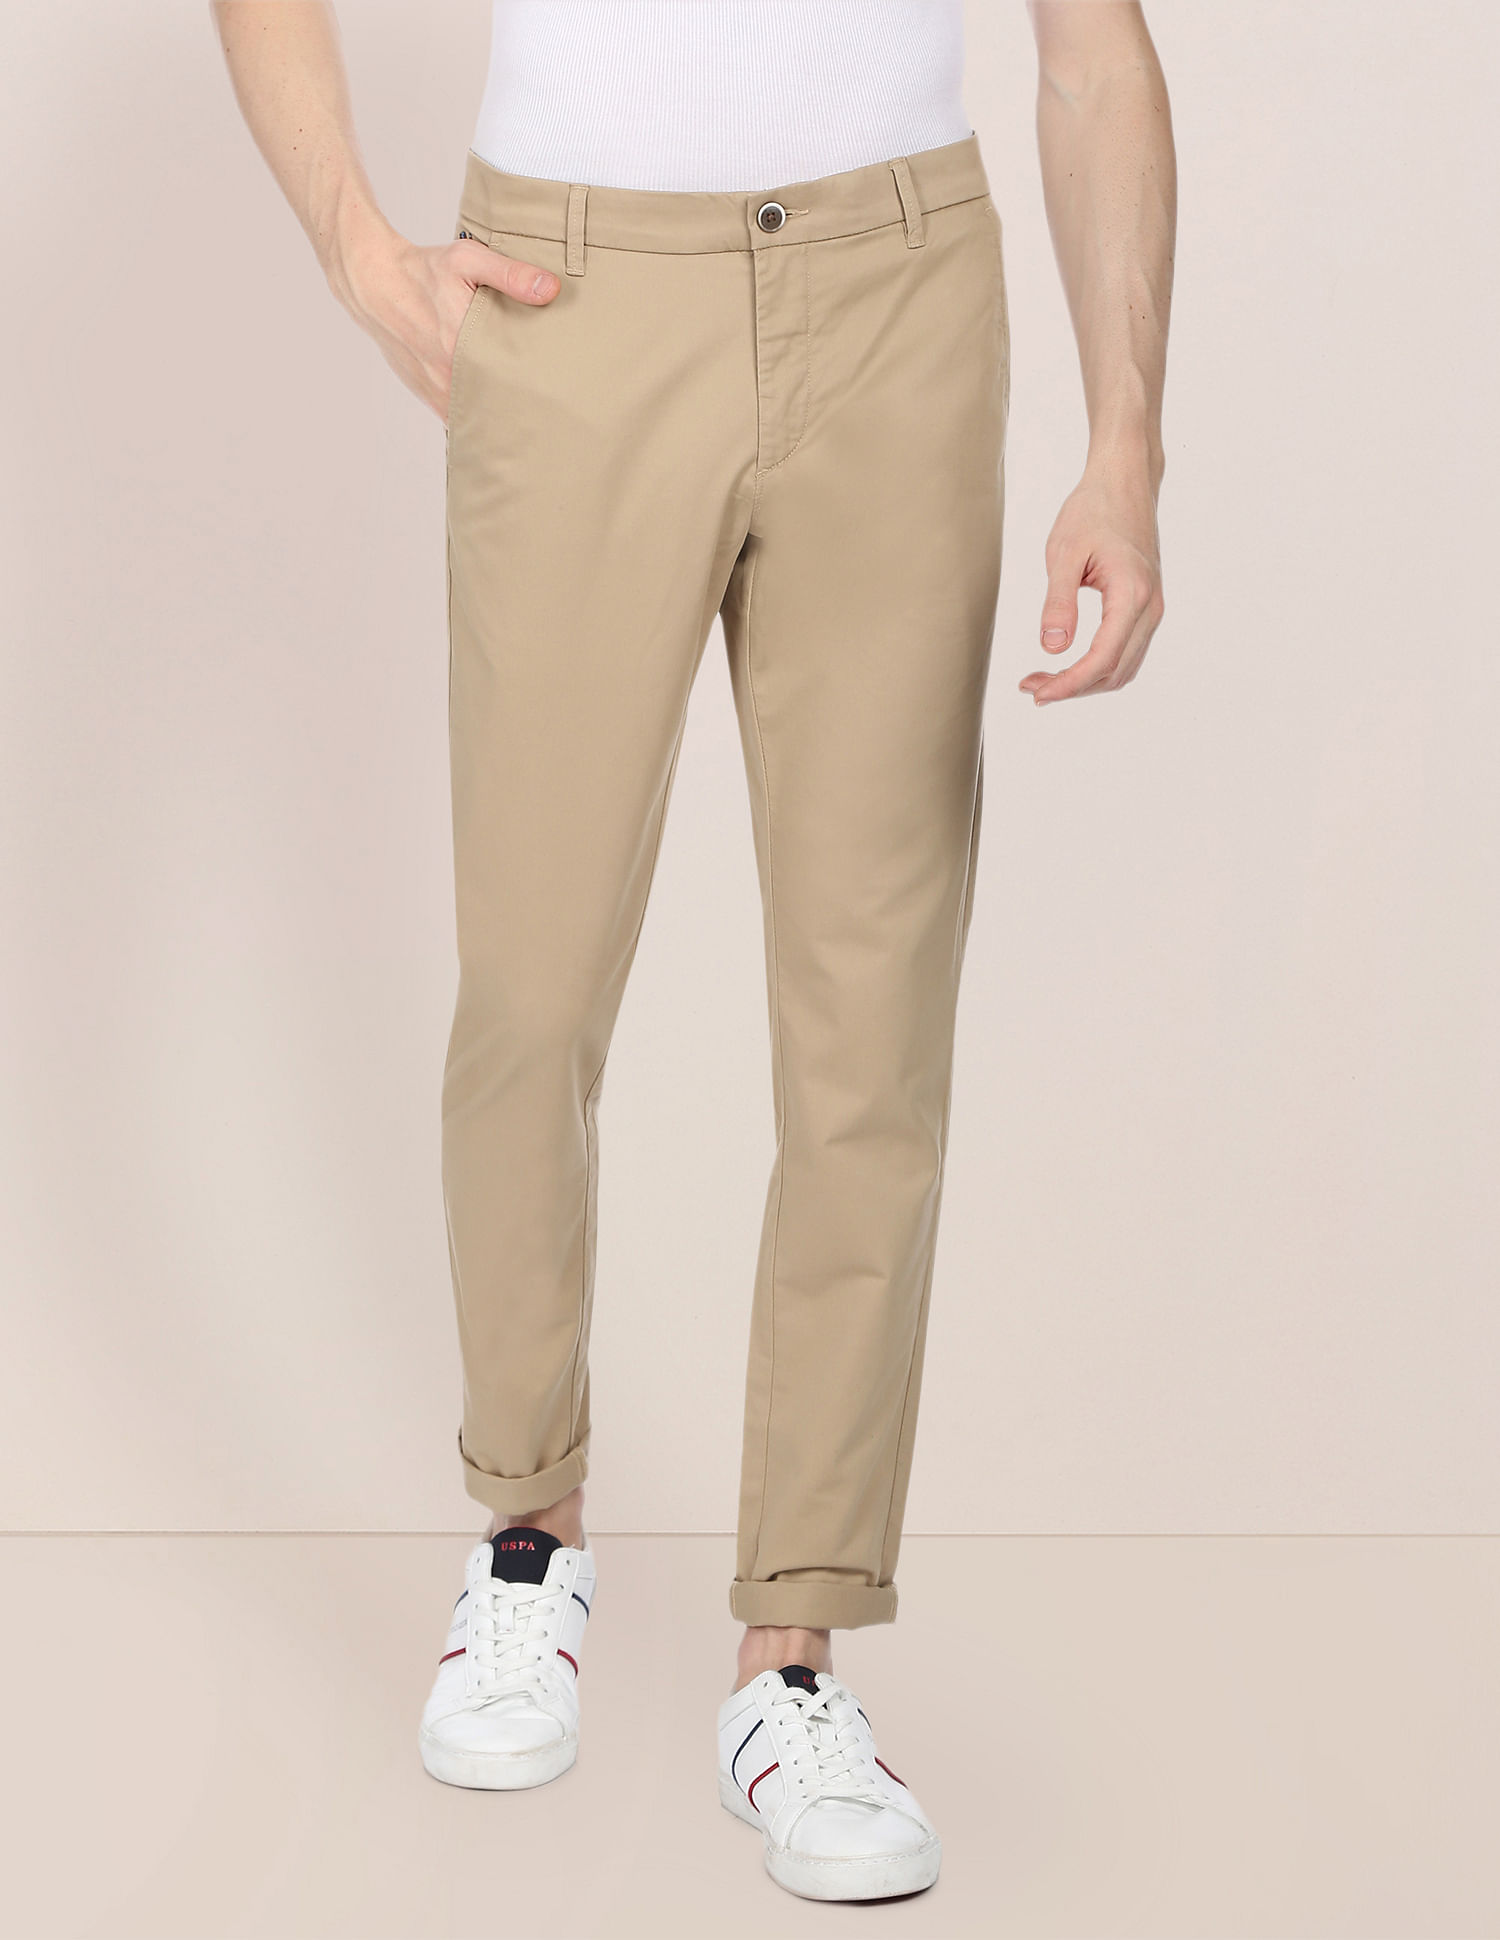 Buy U.S. POLO ASSN. Men's Regular Pants (USTRO0690_Light Grey at Amazon.in